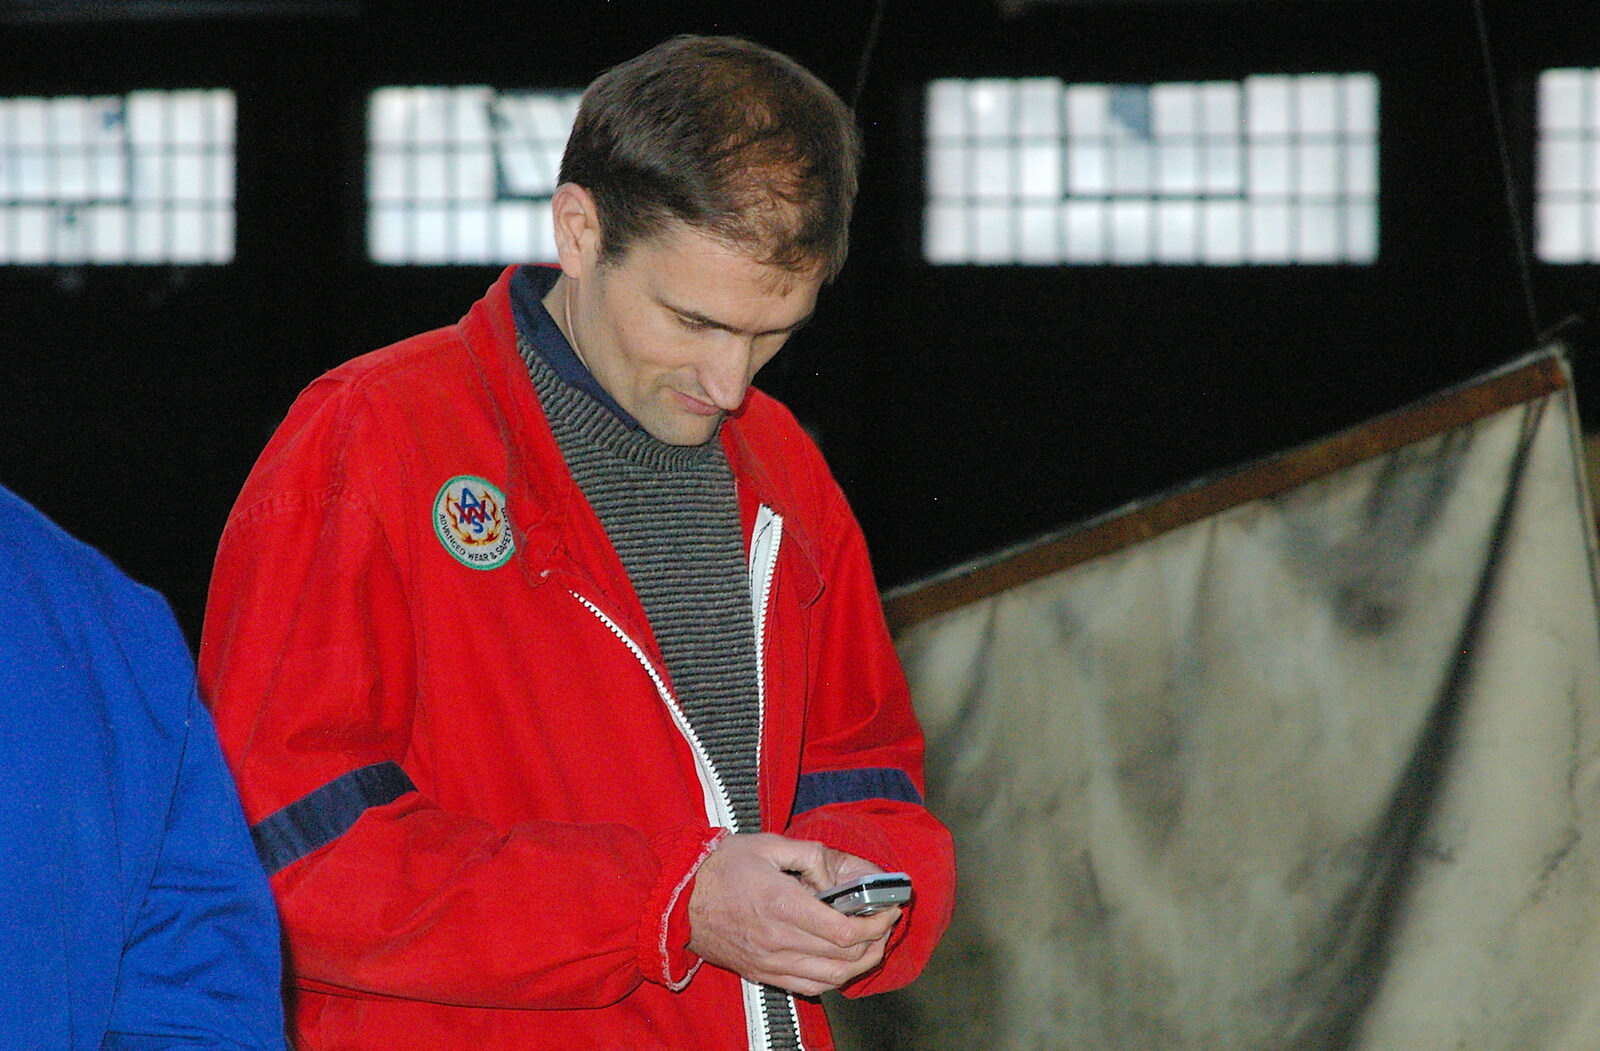 Bob checks his phone from Qualcomm goes Karting in Caxton, Cambridgeshire - 7th November 2005